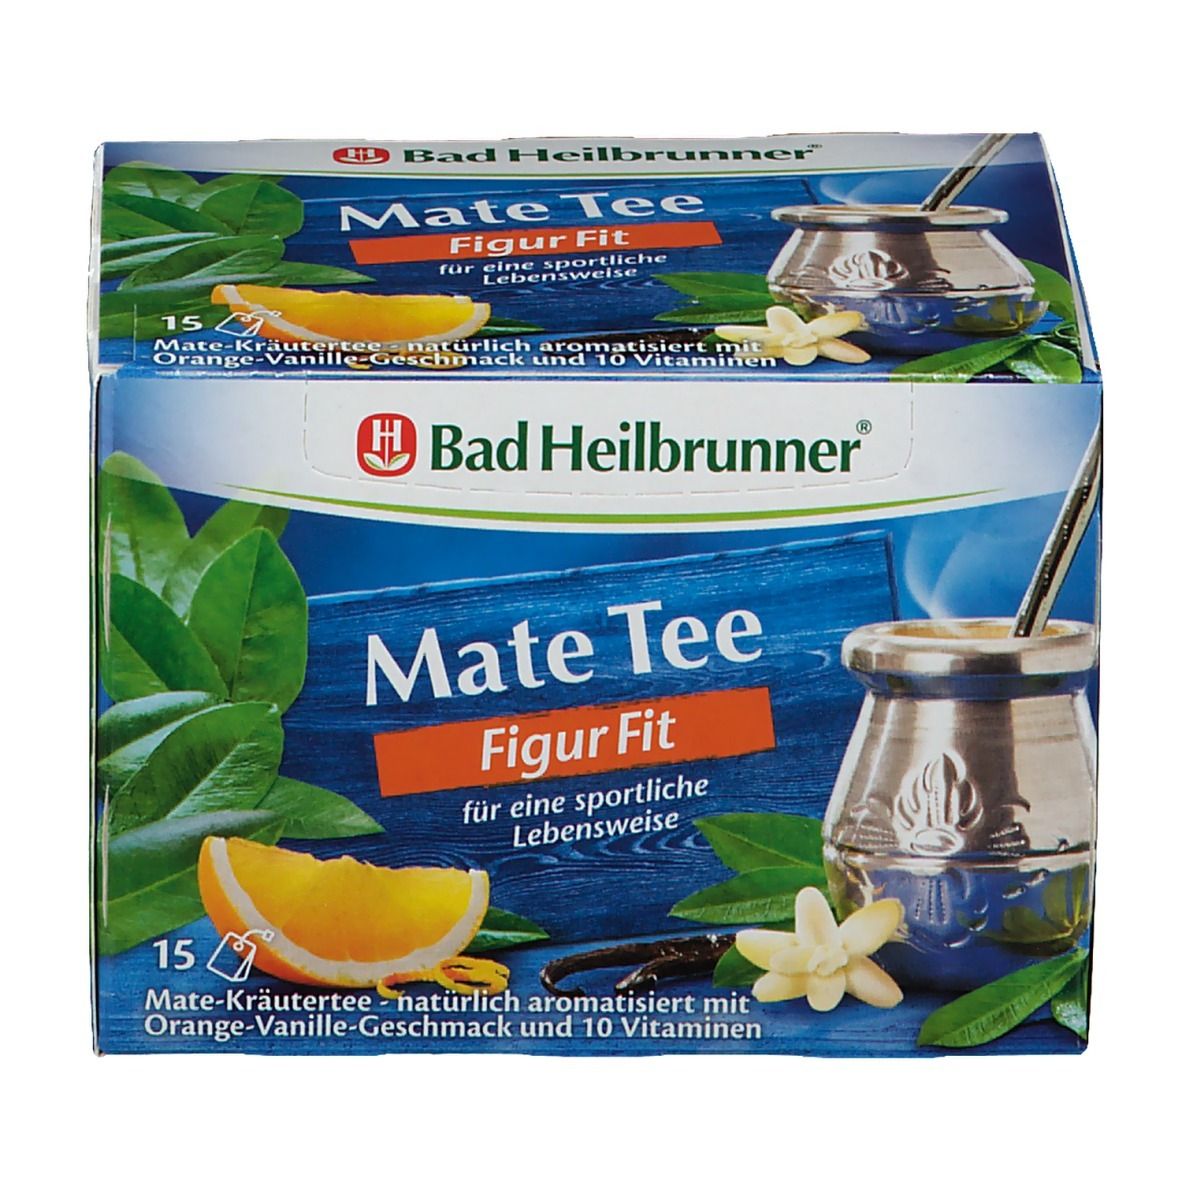 Bad Heilbrunner® Figur-Fit Tee